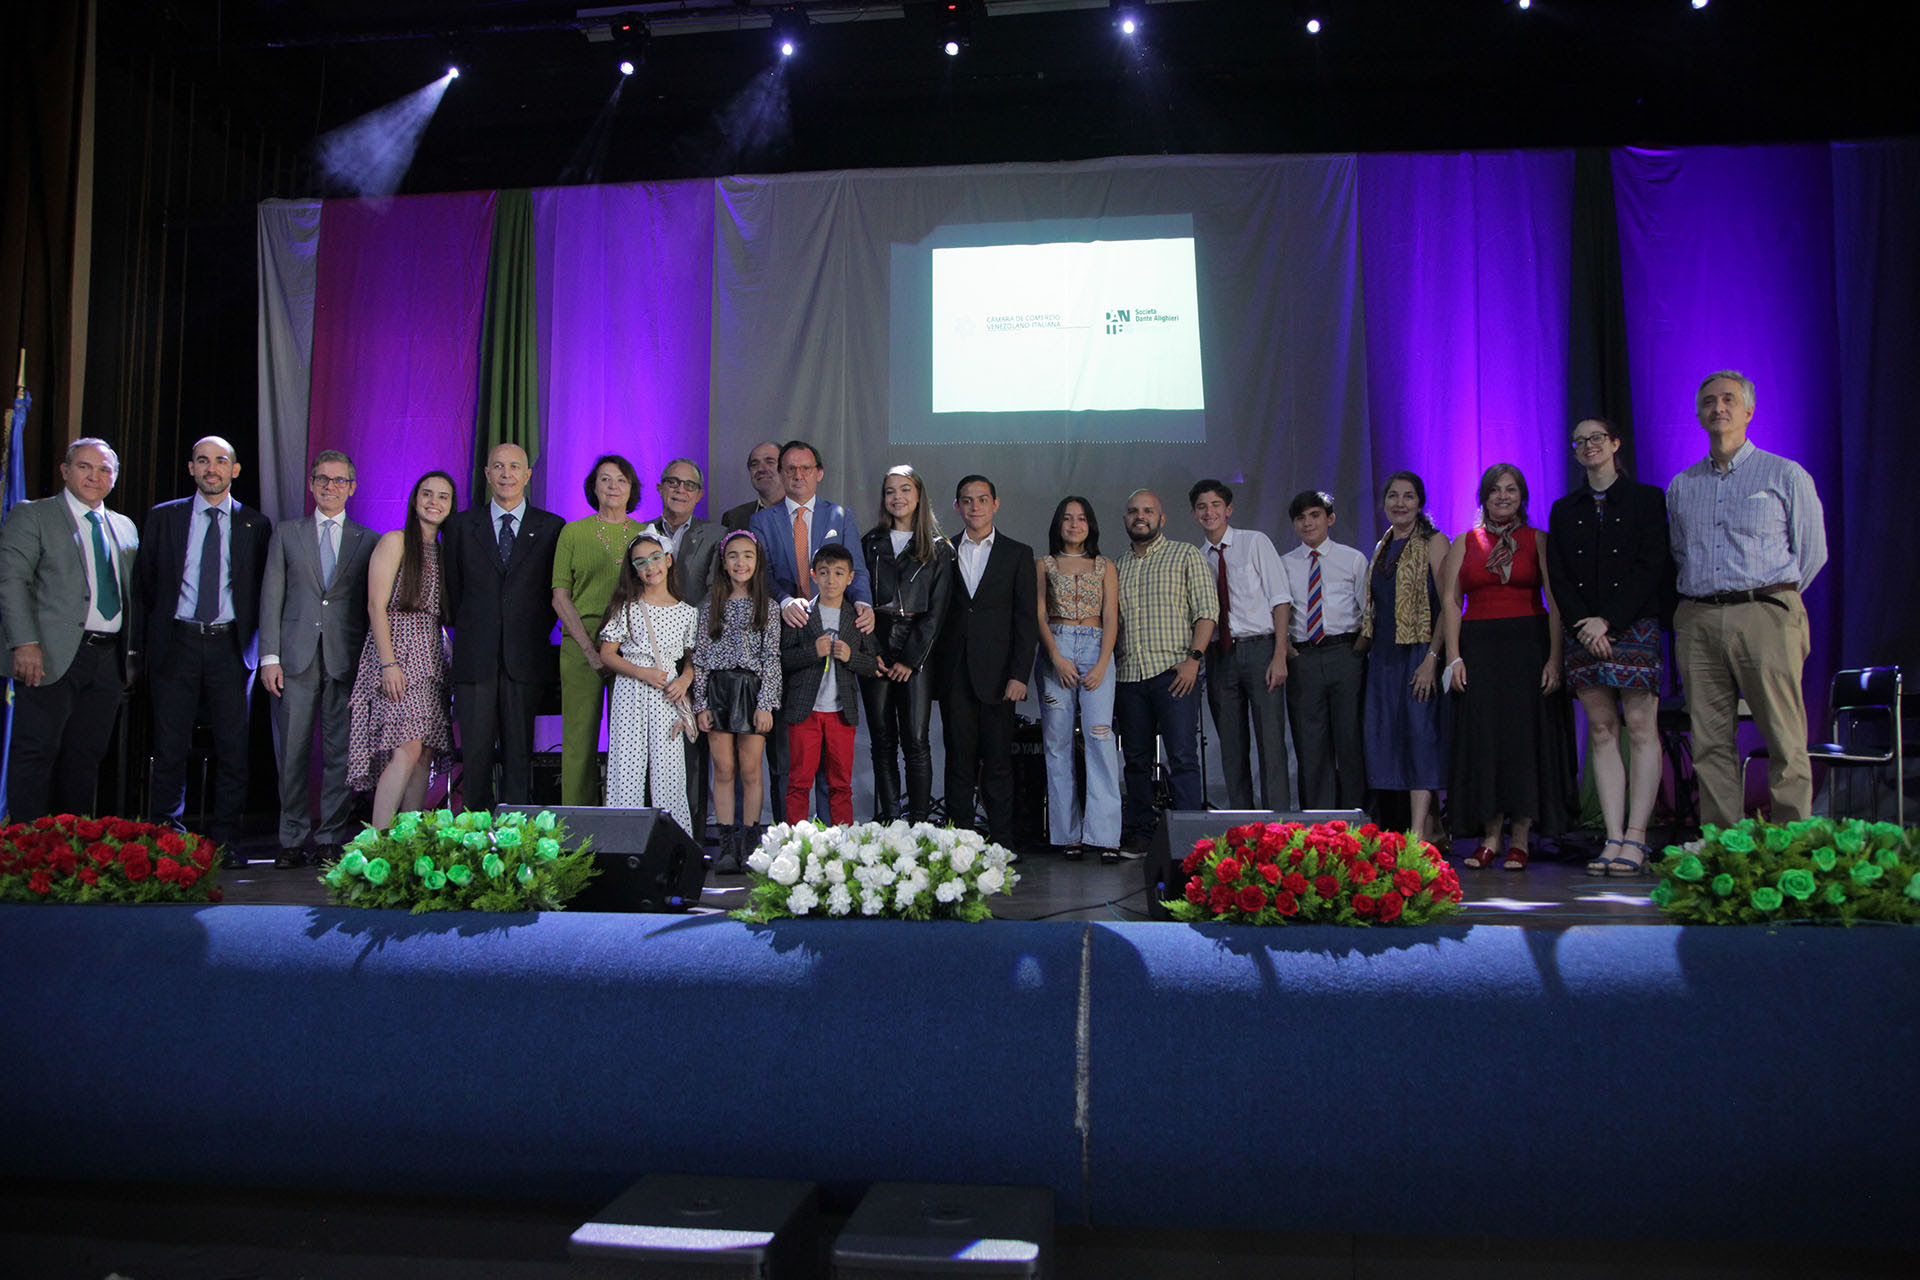 Concurso “Come, Scusa? Non Ti Followo” Premió El Talento De Jóvenes Estudiantes Venezolanos